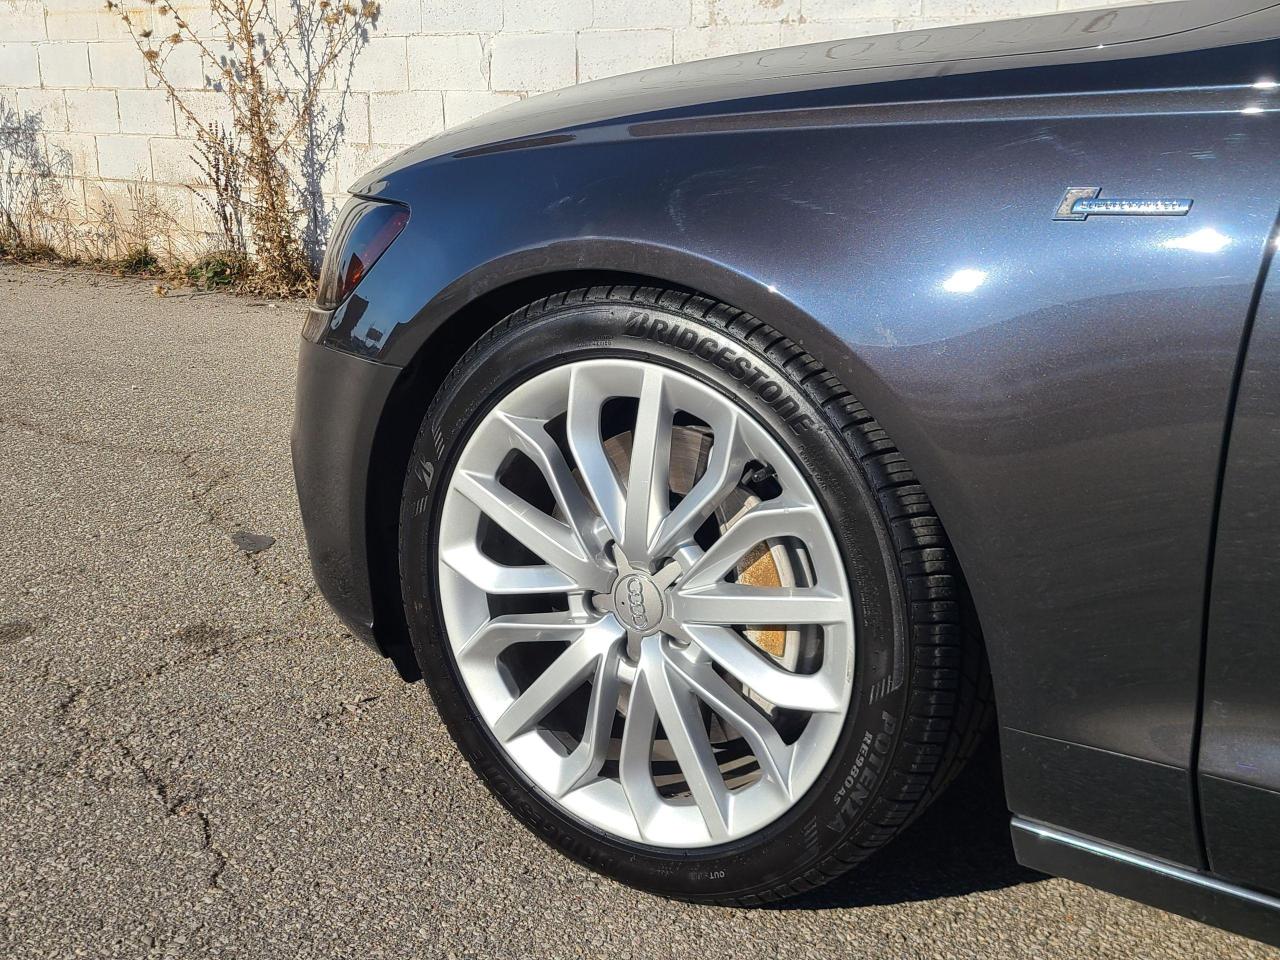 2014 Audi A6 TECHNIK - BLINDSPOT|LANE ASSIST|SUNROOF|360CAM|NAV - Photo #6